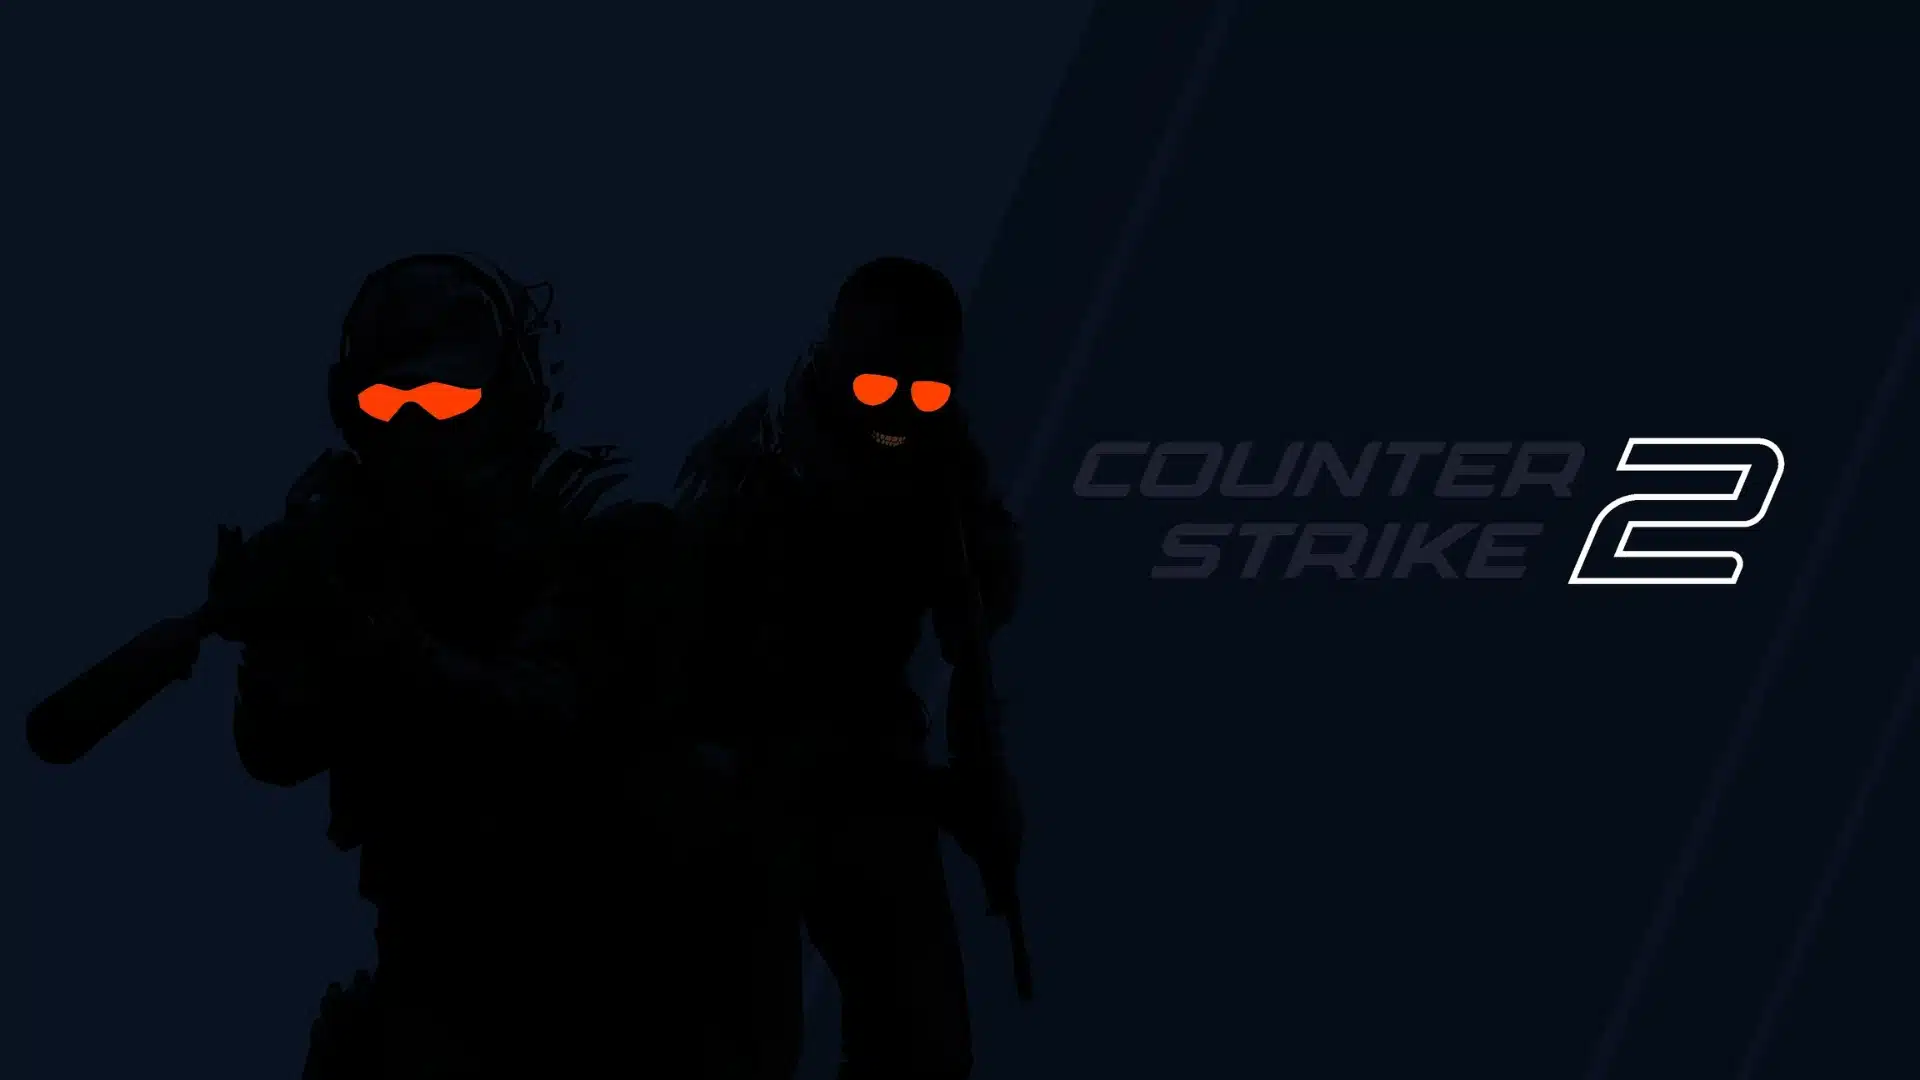 CS:GO quebra recordes de base de jogadores antes do lançamento altamente  antecipado de Counter-Strike